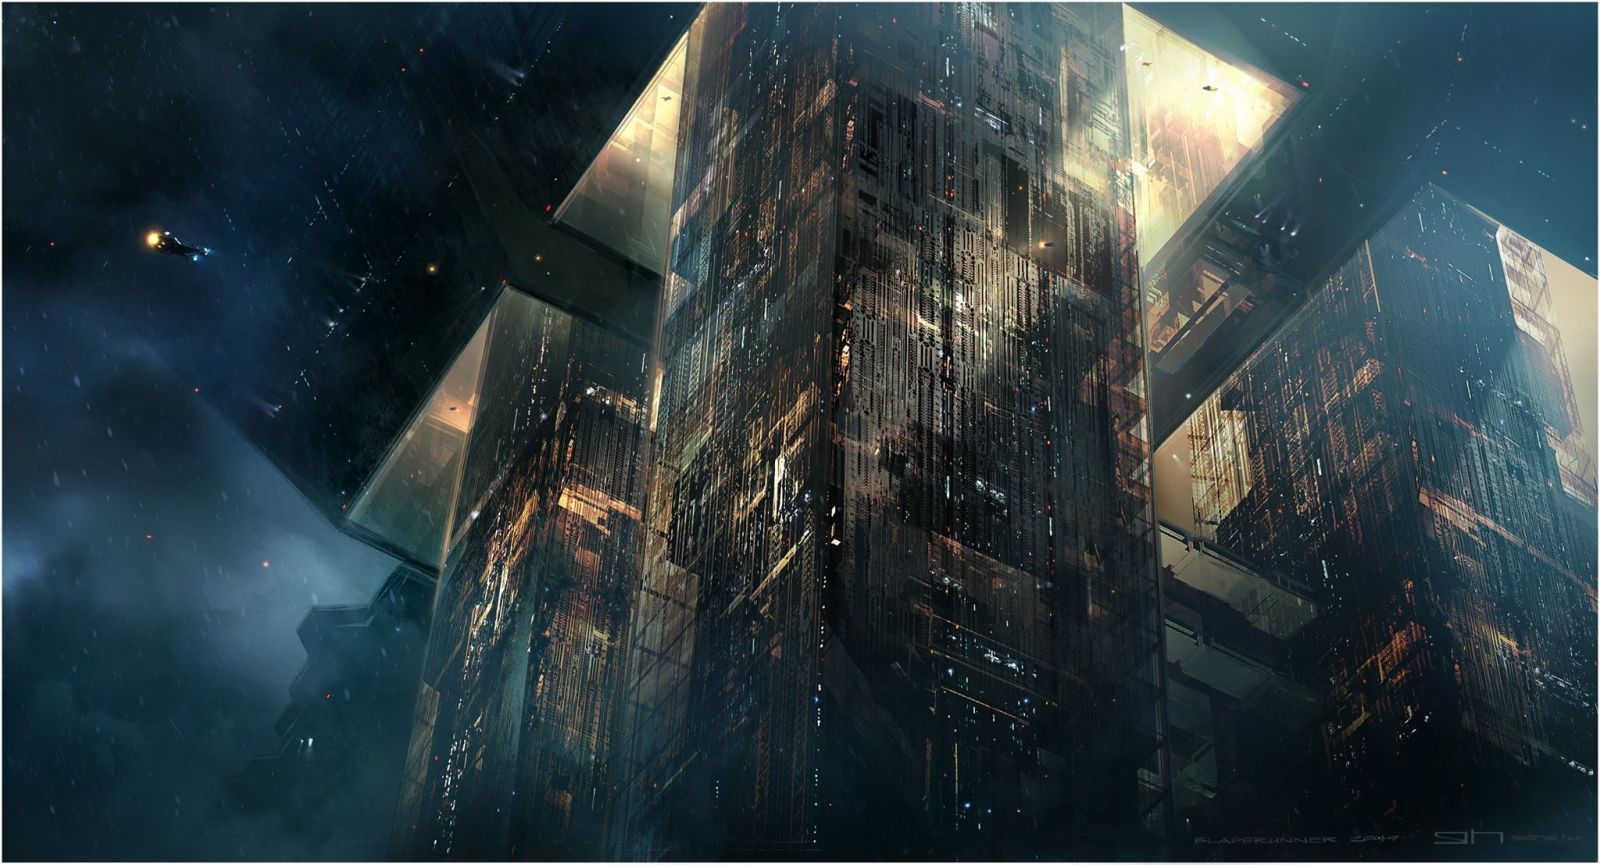 Blade Runner 2049 Concept Art. - Blade Runner 2049 Movie News